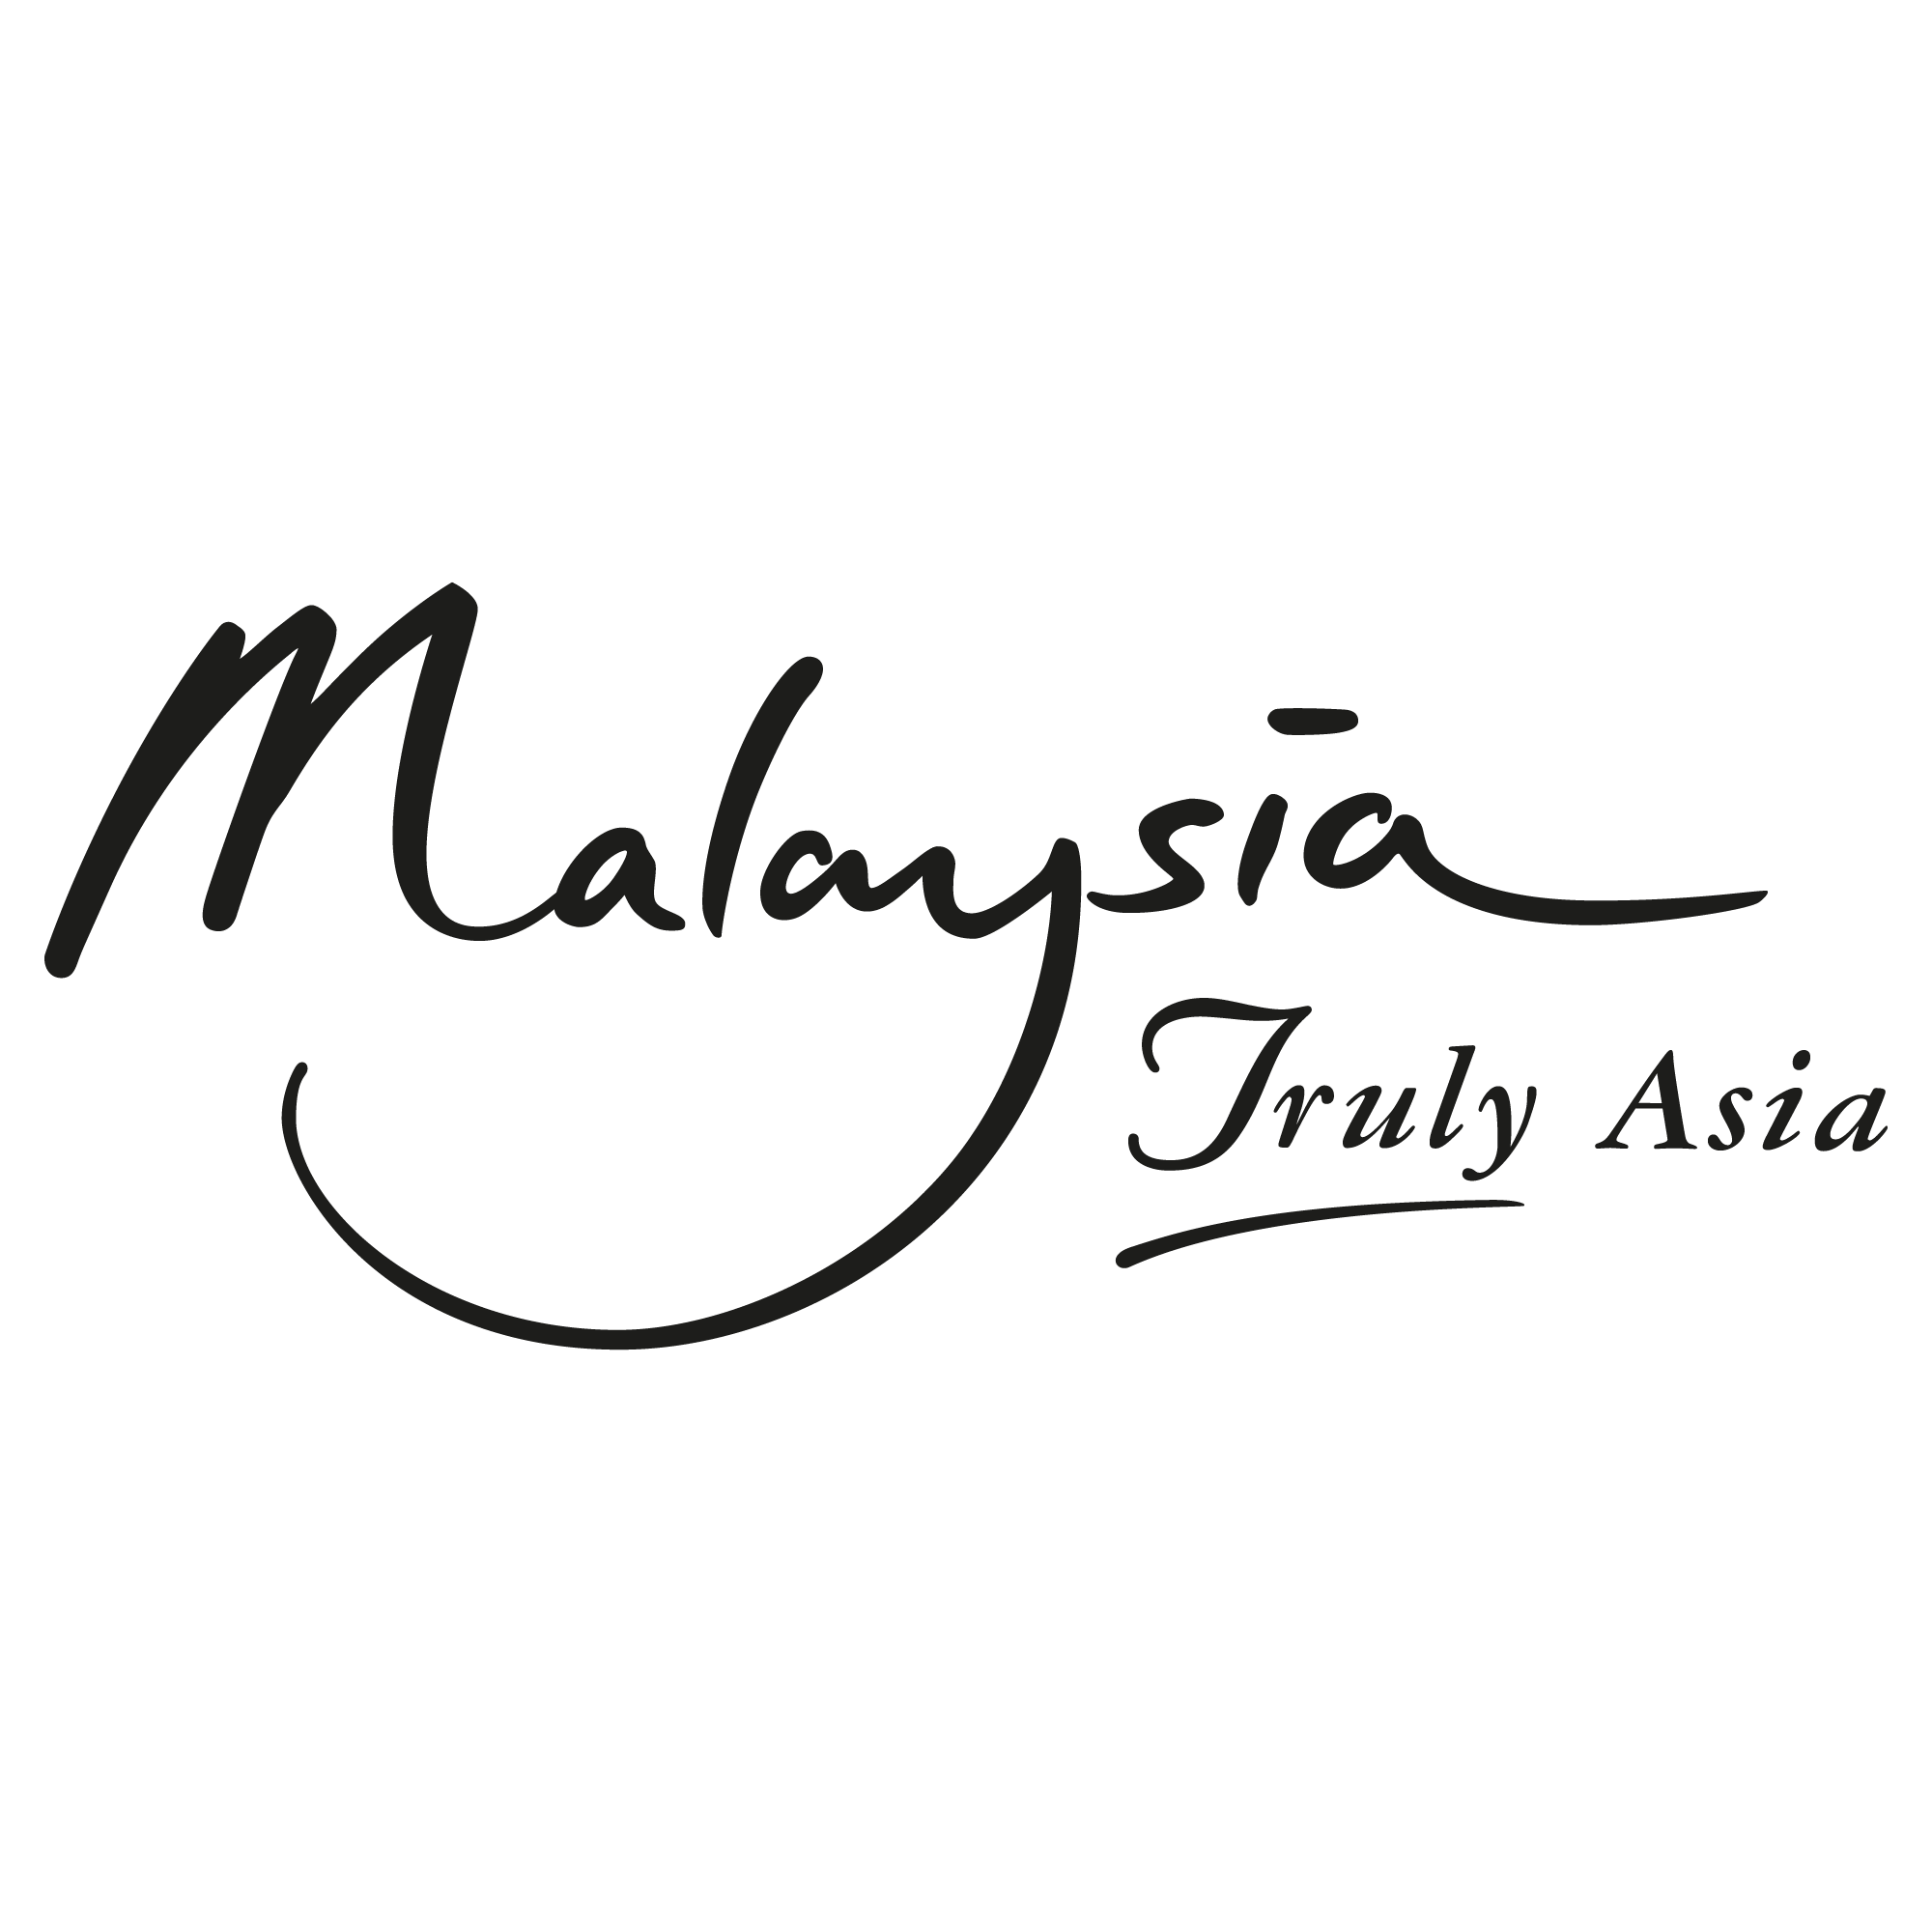 Malaysia Truly Asia